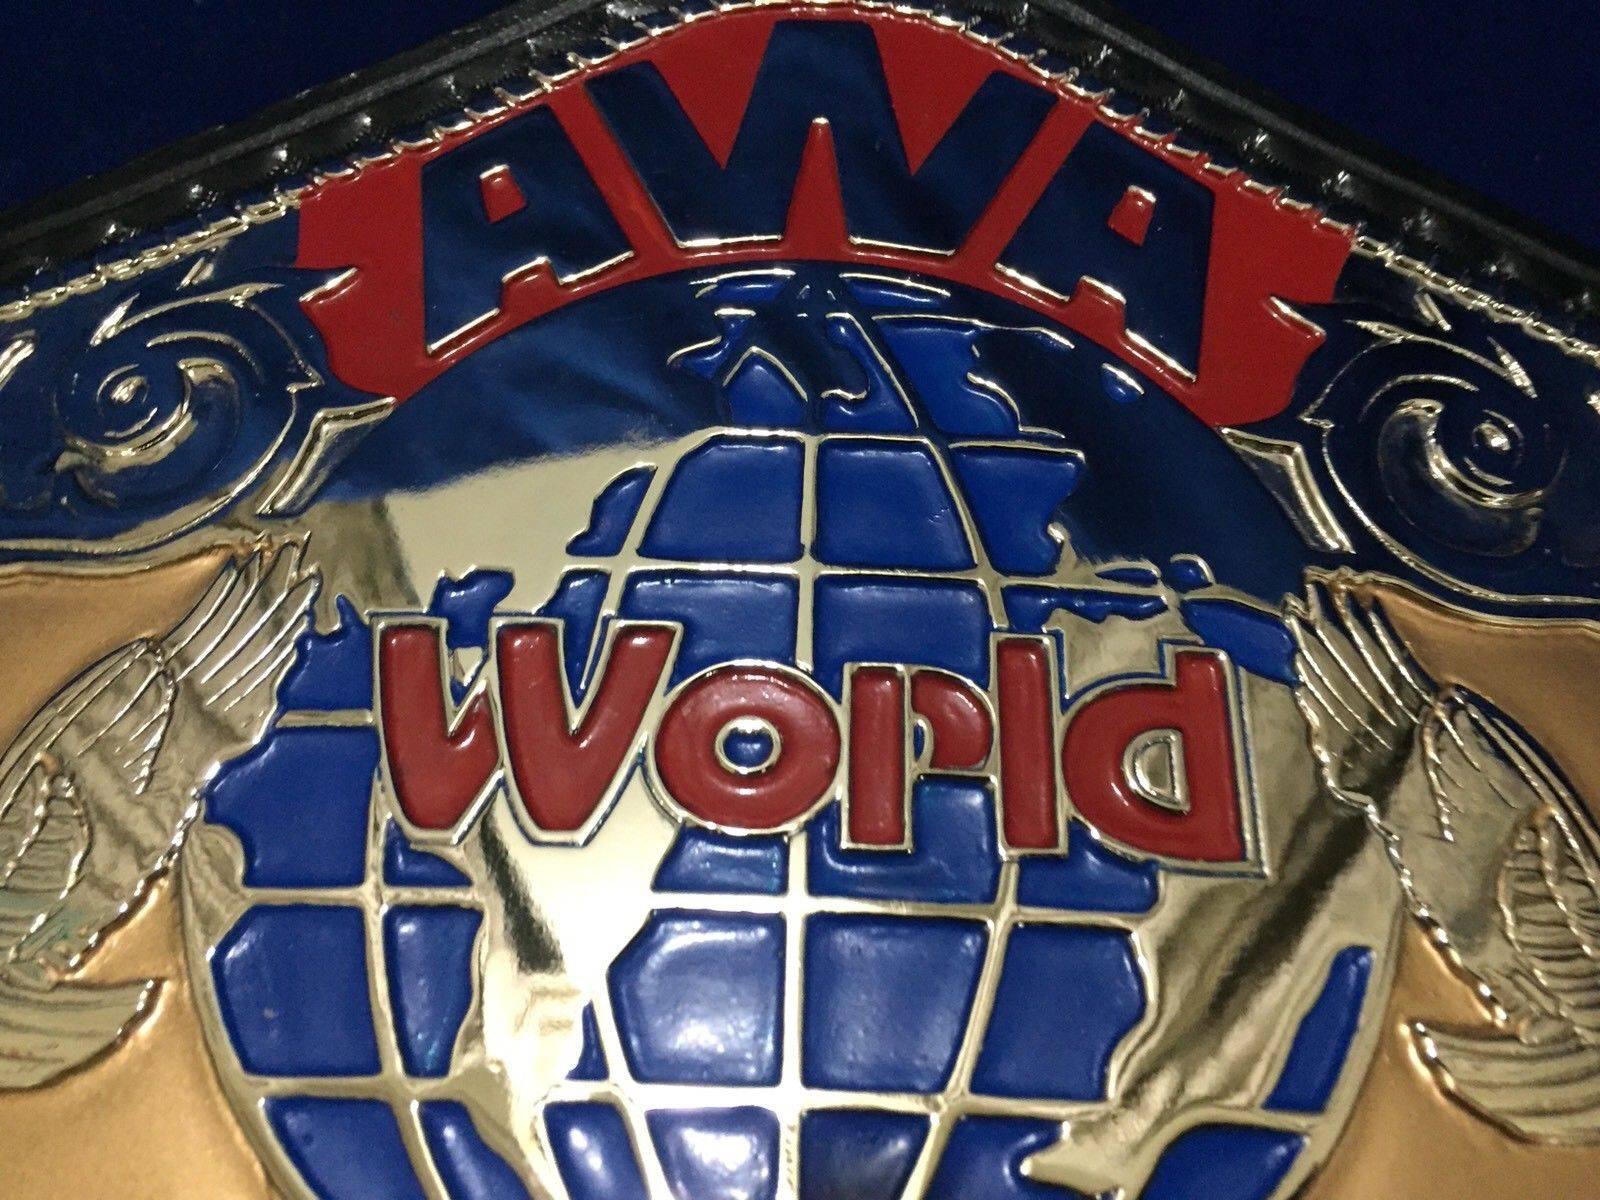 AWA WORLD TAG TEAM 24K GOLD Championship Belt